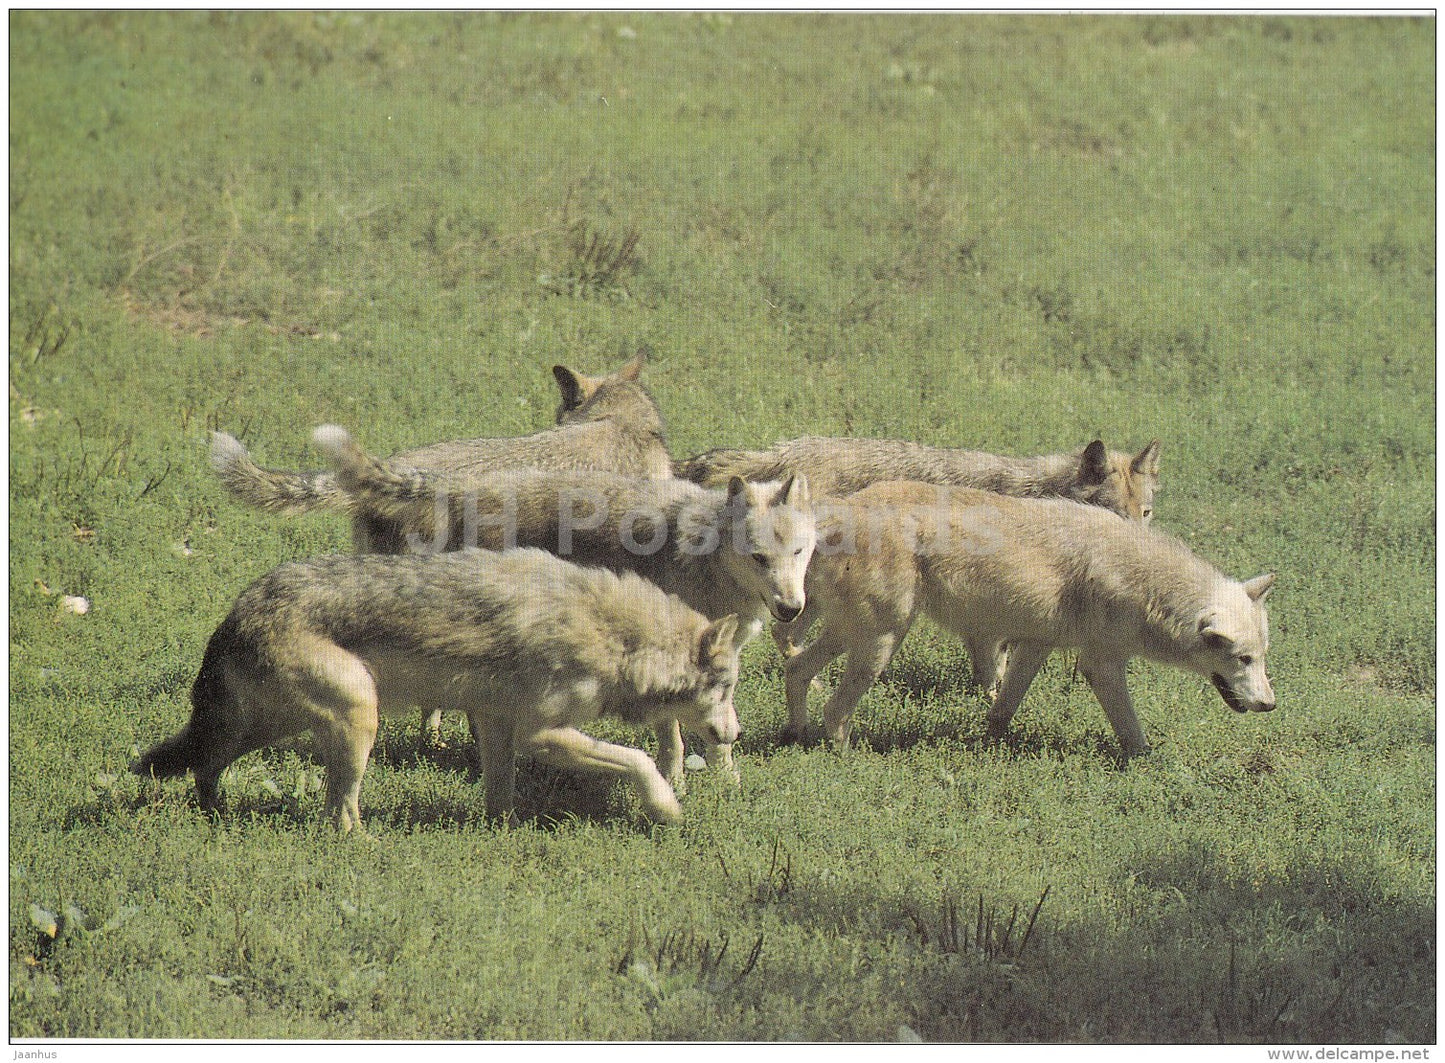 Northwestern wolf - Canis lupus occidentalis - animals - Zoo - Czechoslovakia - unused - JH Postcards